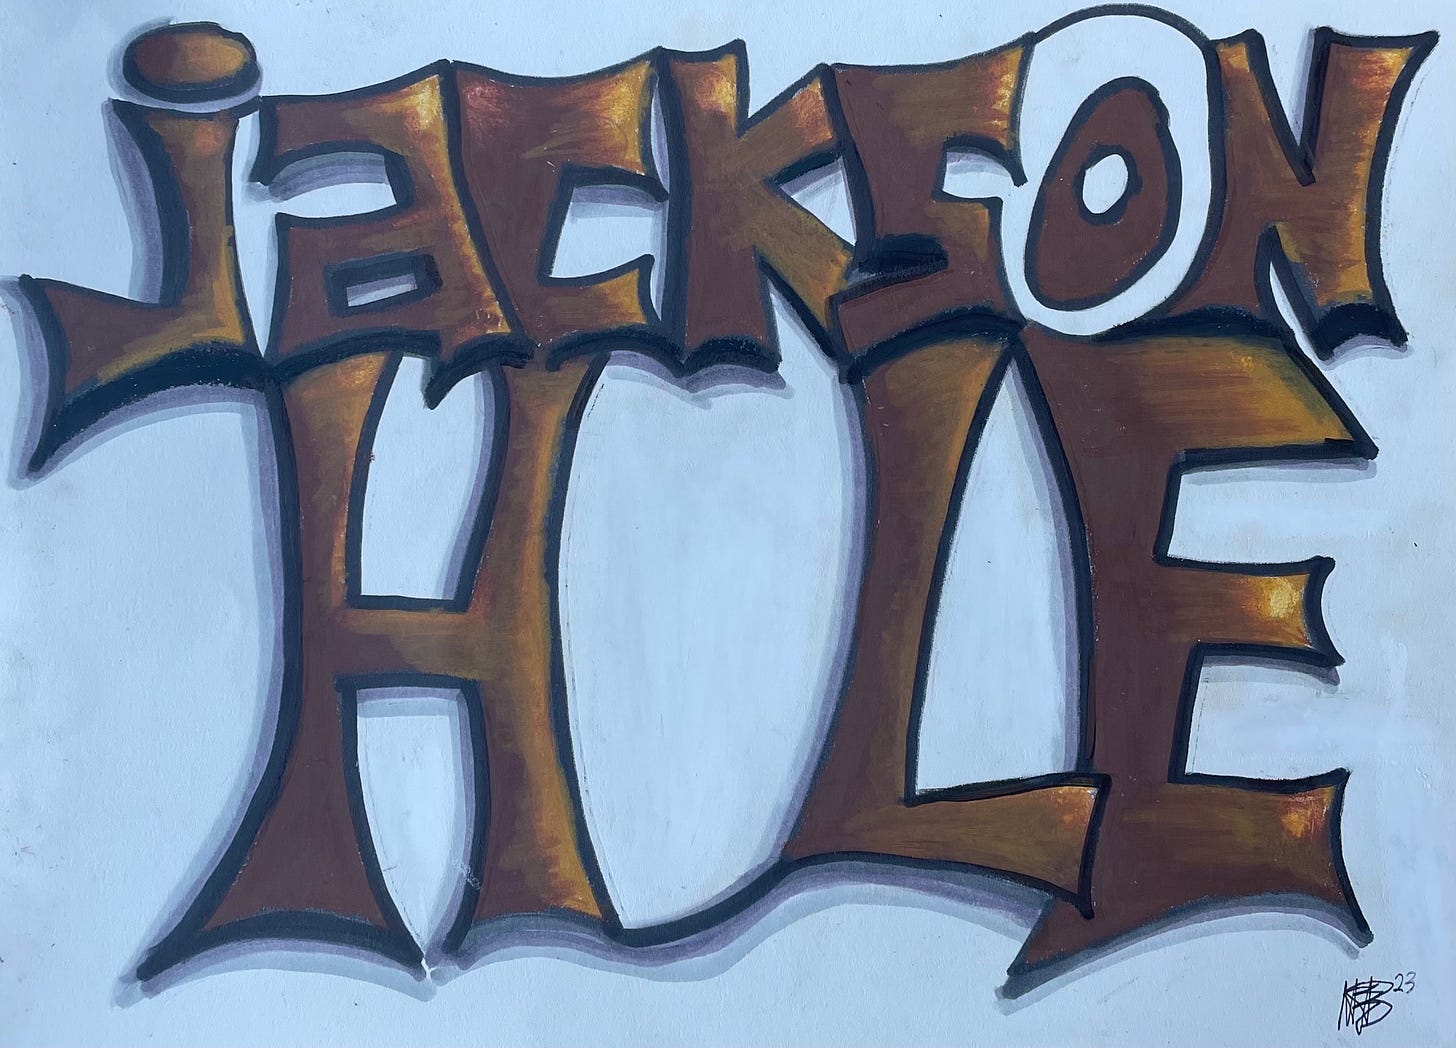 Jackson Hole graffiti